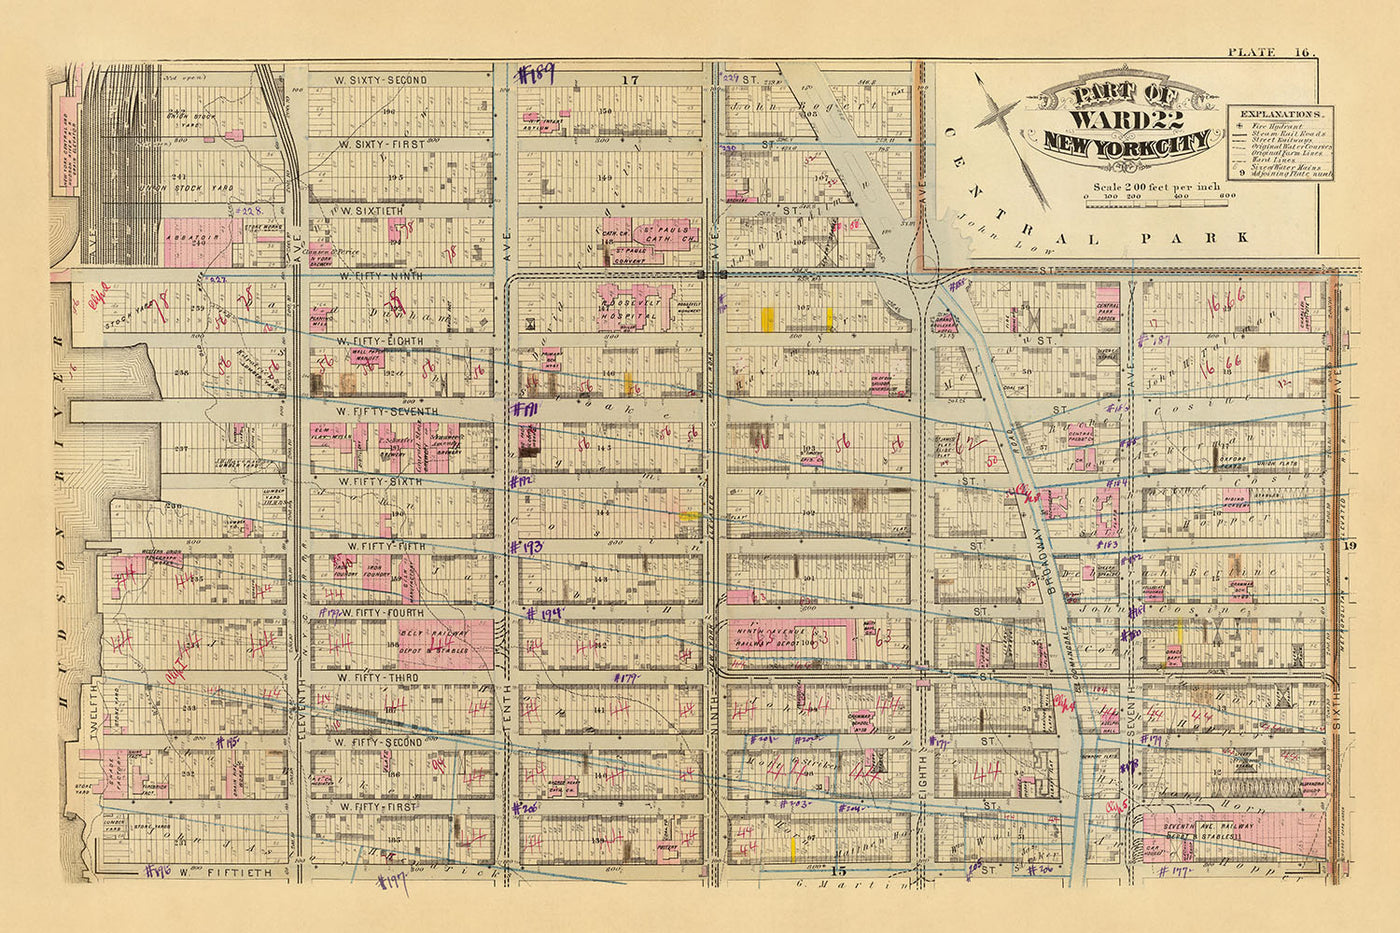 Old Map of Clinton, Ward 22, NYC, 1879: Hells Kitchen, Columbus Circle, Roosevelt Hospital, Central Park